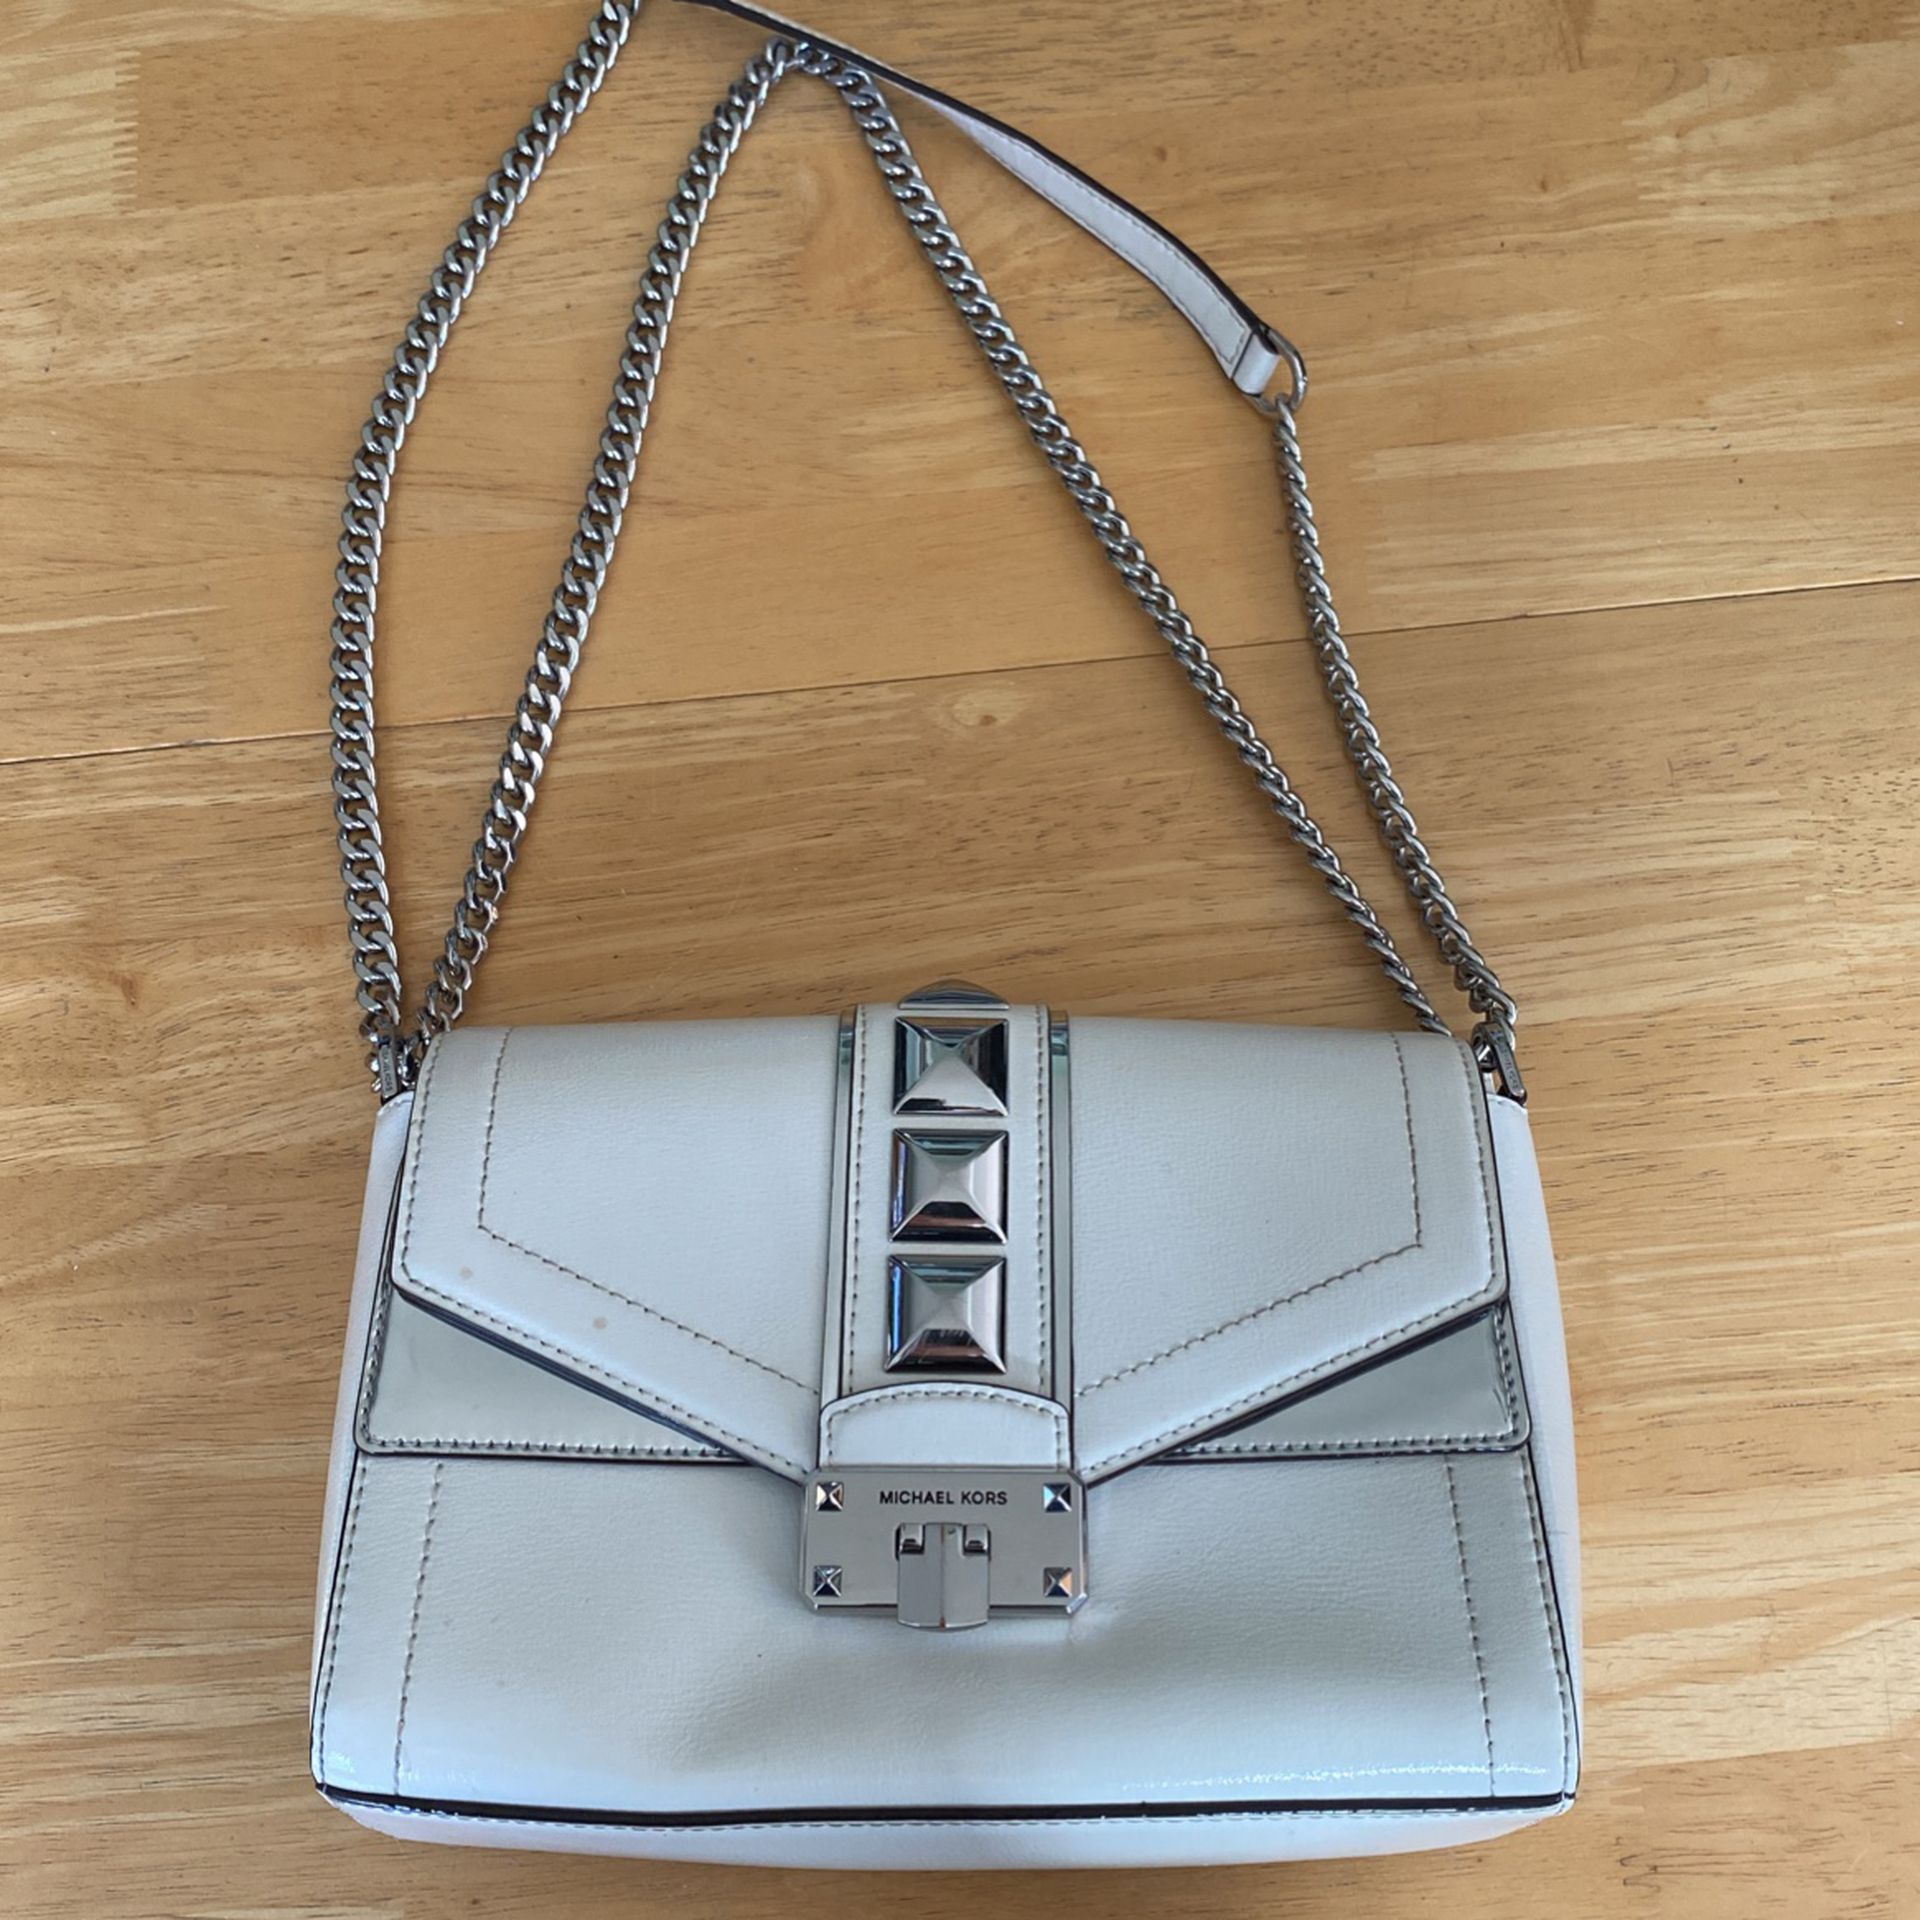 Michael Kors Kinsley optic white silver studded leather purse